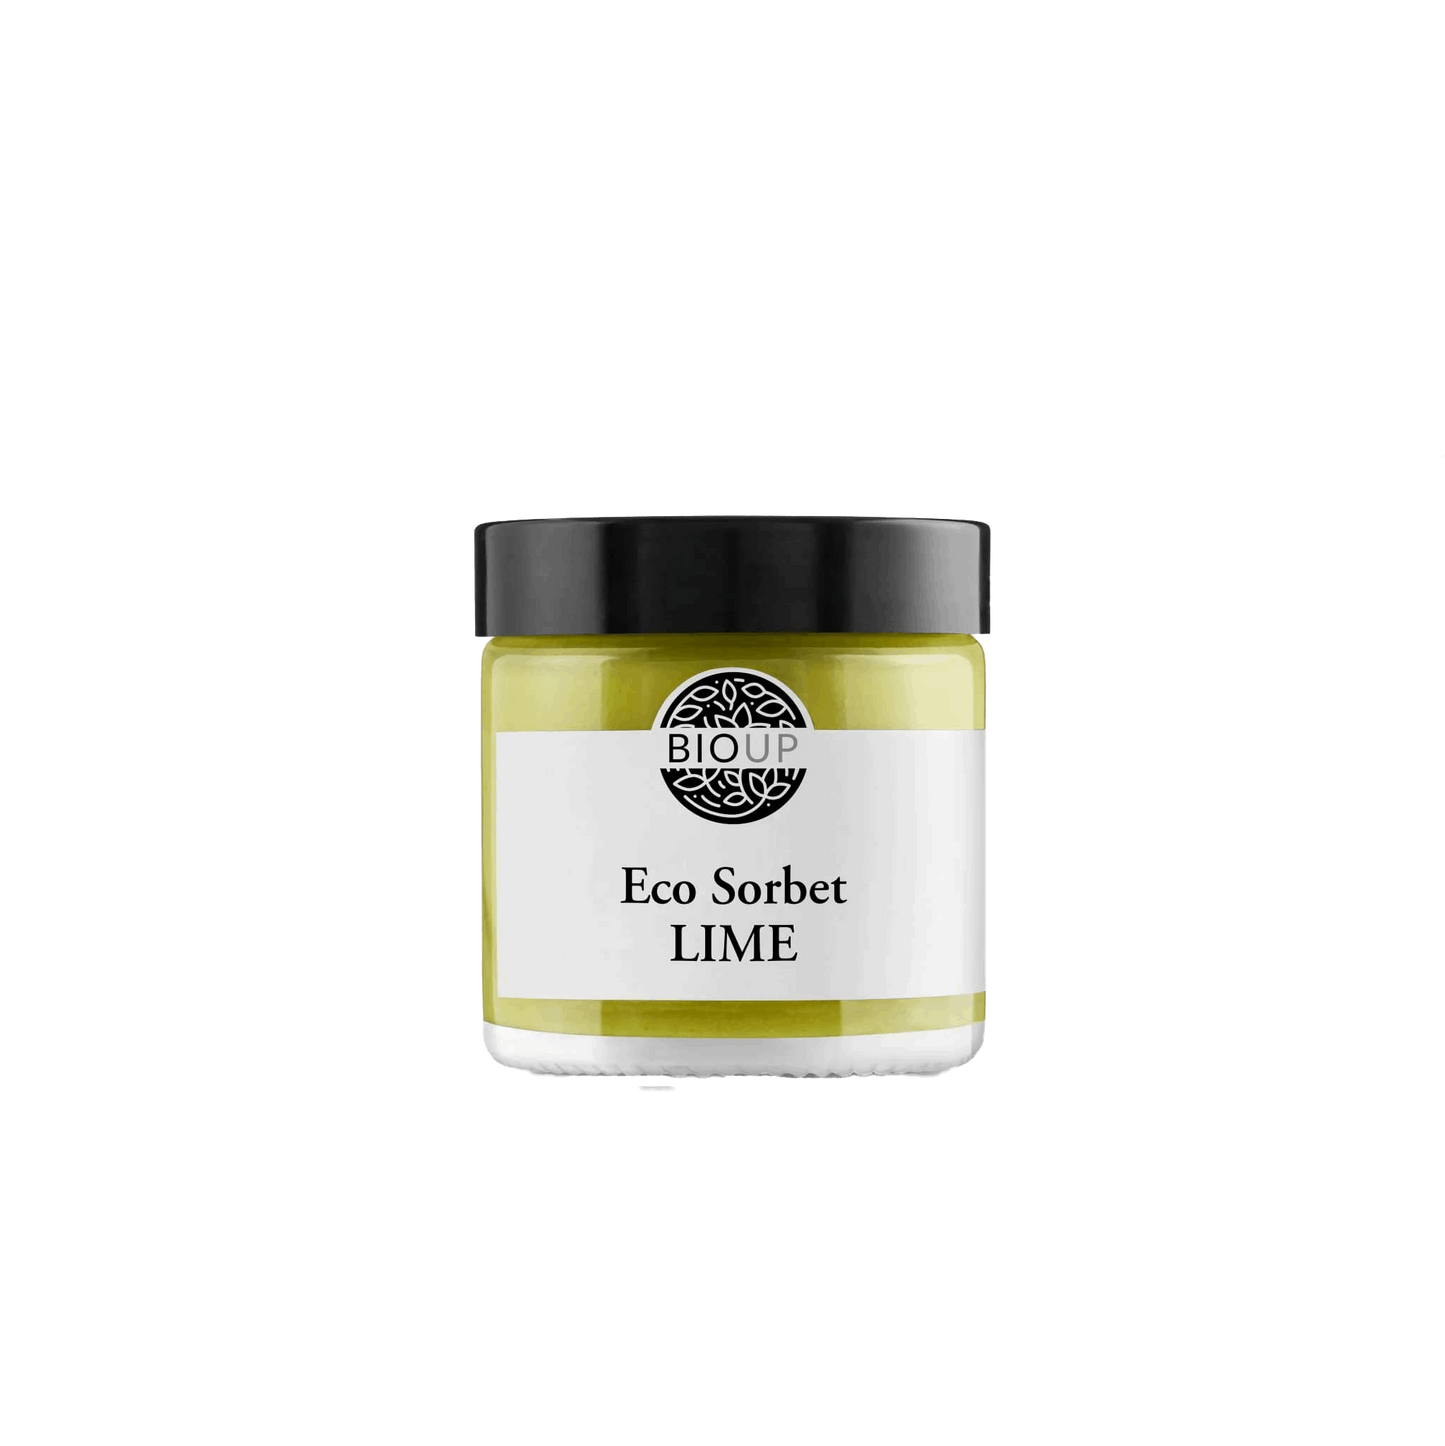 BIOUP  Eco Sorbet LIME – Regulating Oil Cream with Hemp, Birch and Lime, 60ml